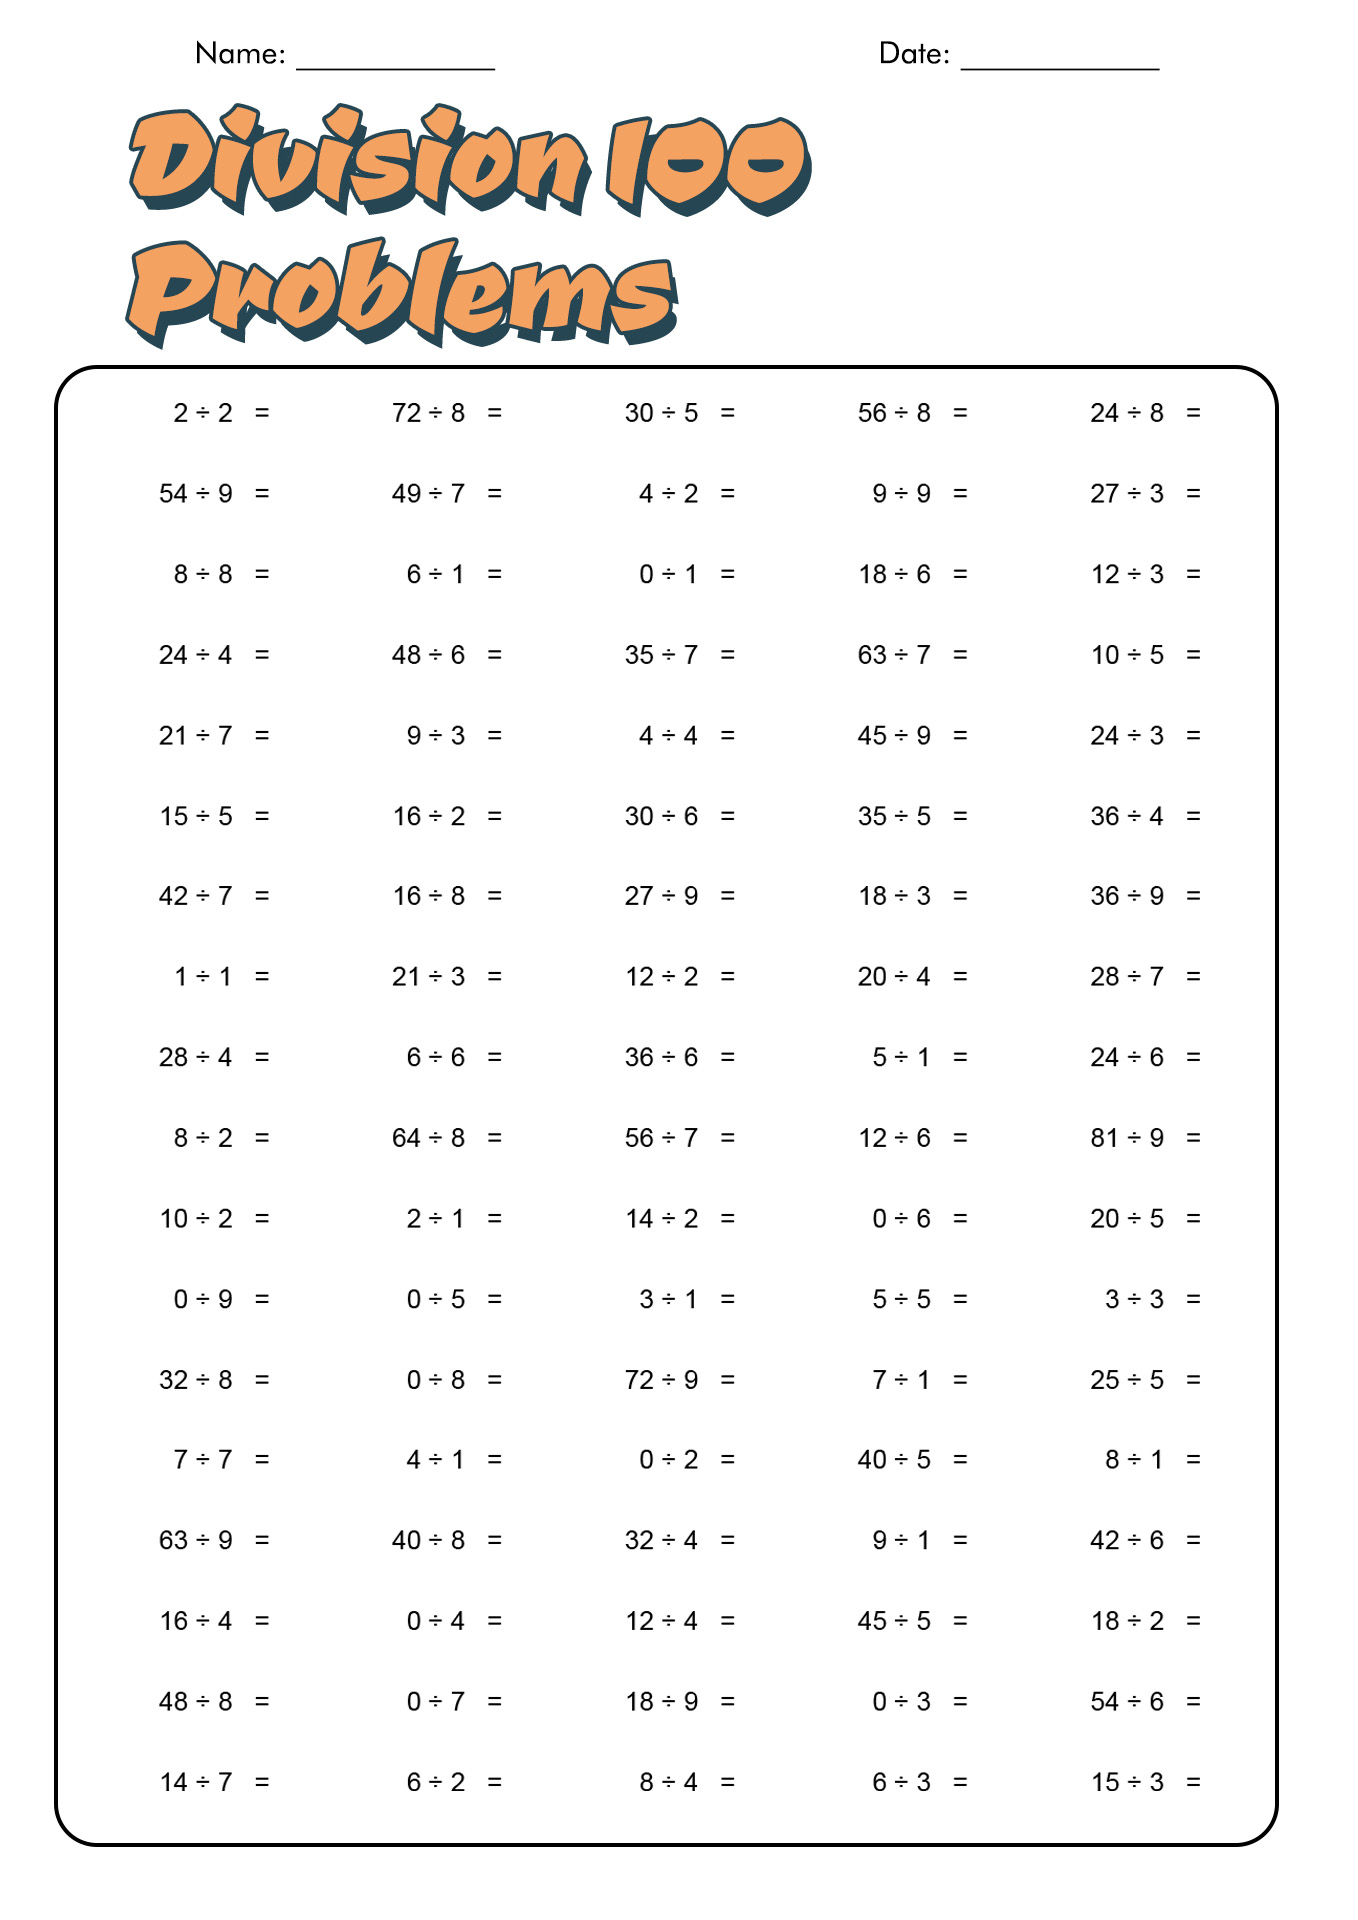 Math Division Worksheets 100 Problems Image